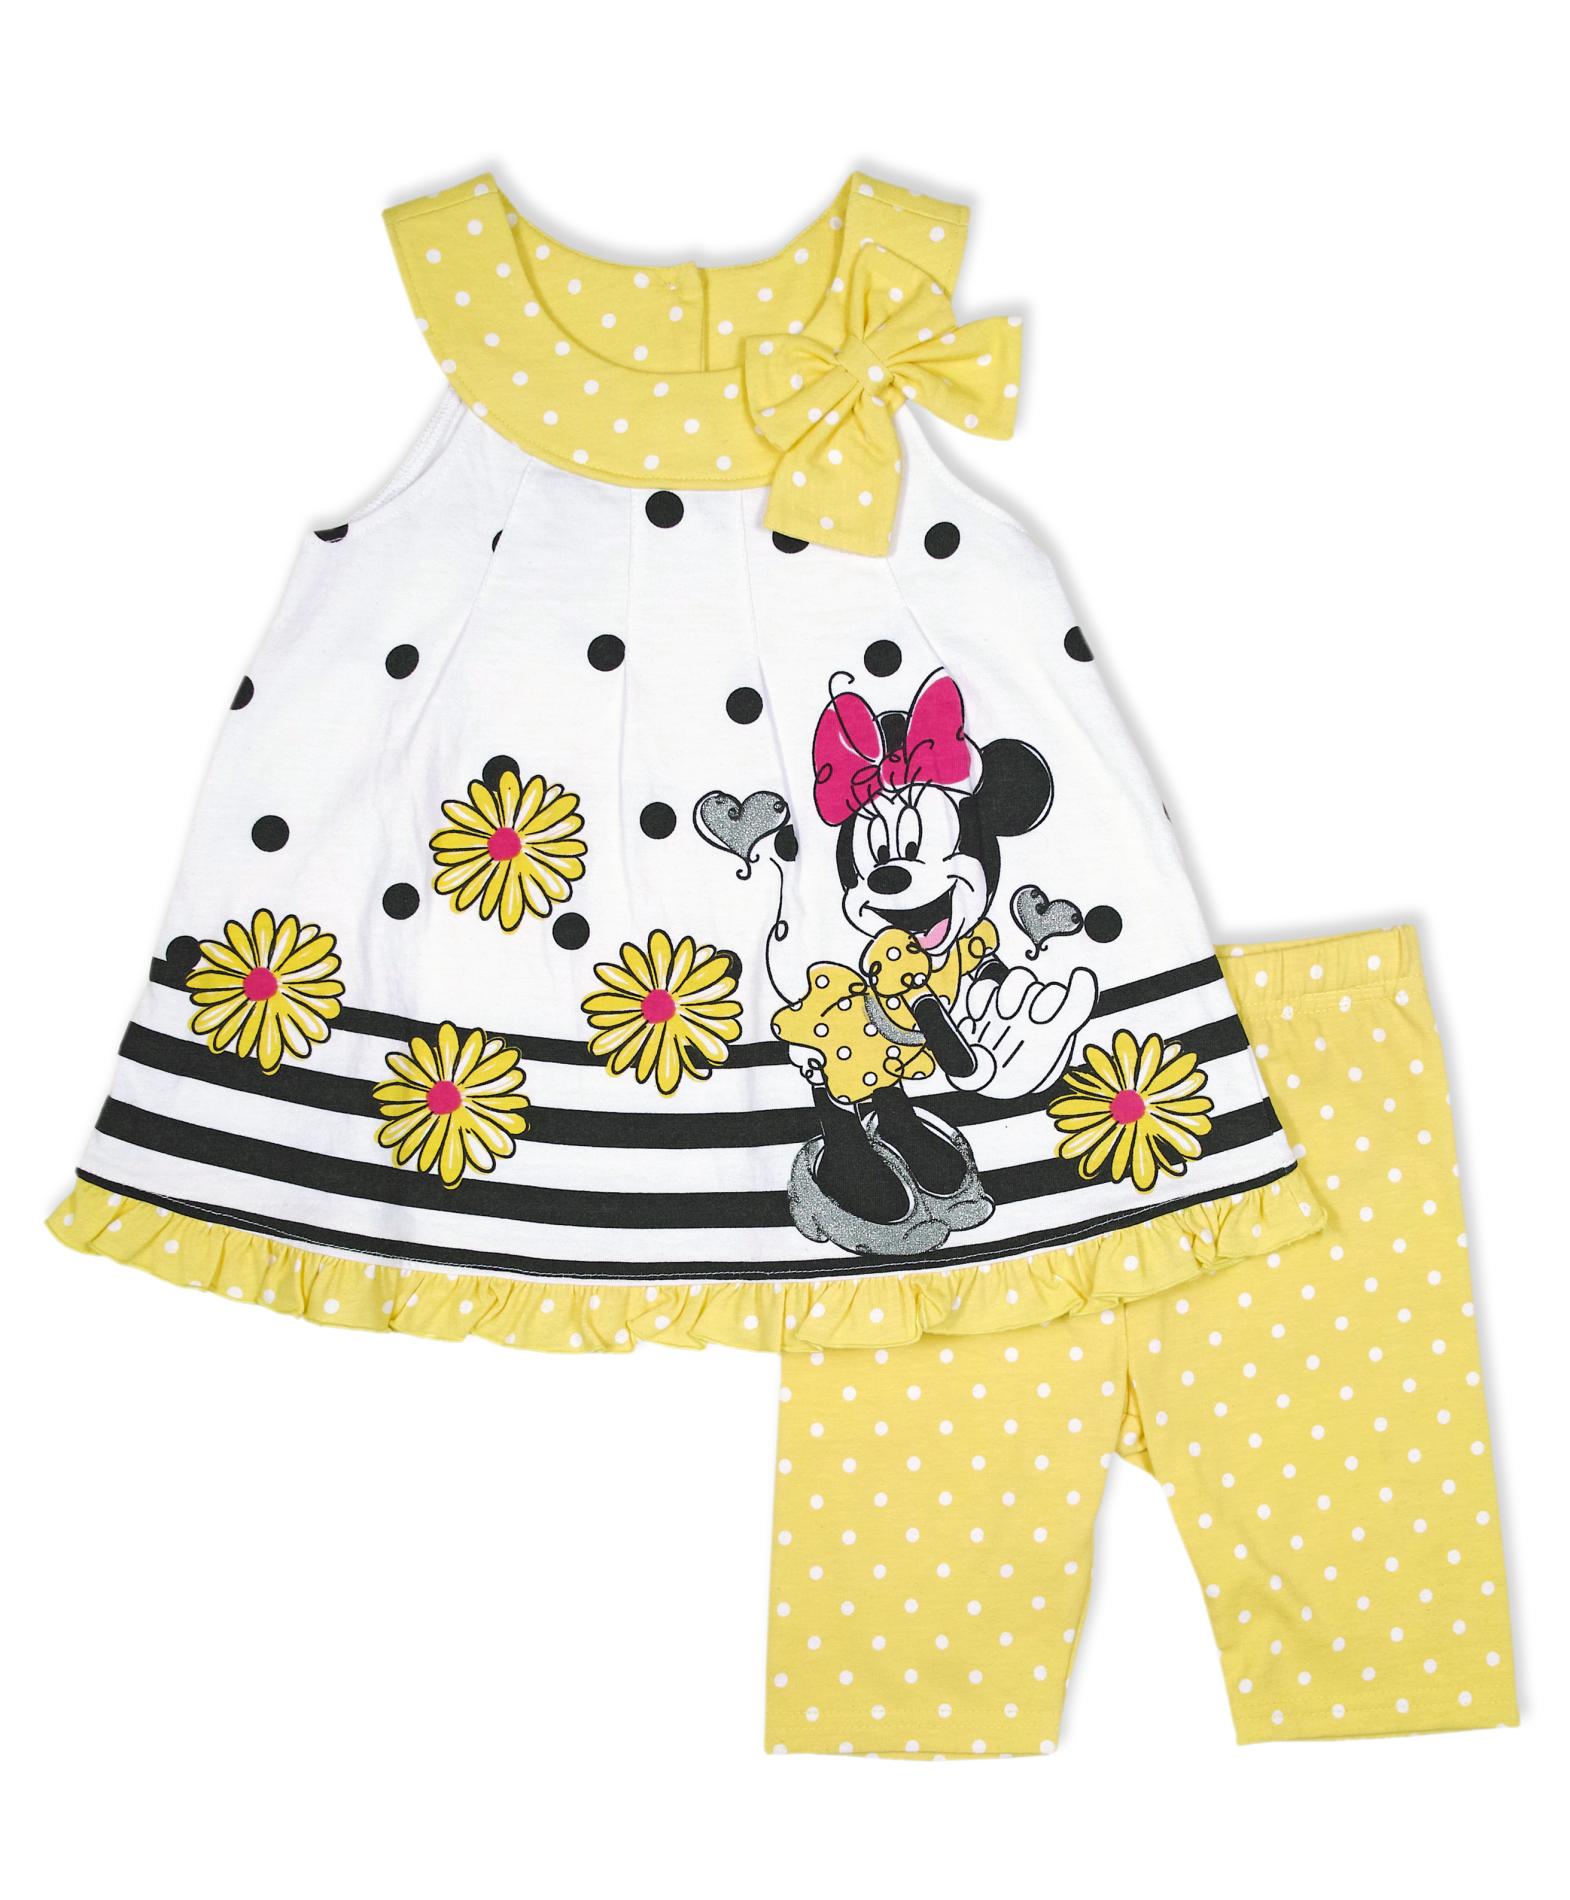 Disney Minnie Mouse Infant & Toddler Girl's Tank Top & Shorts - Polka Dot